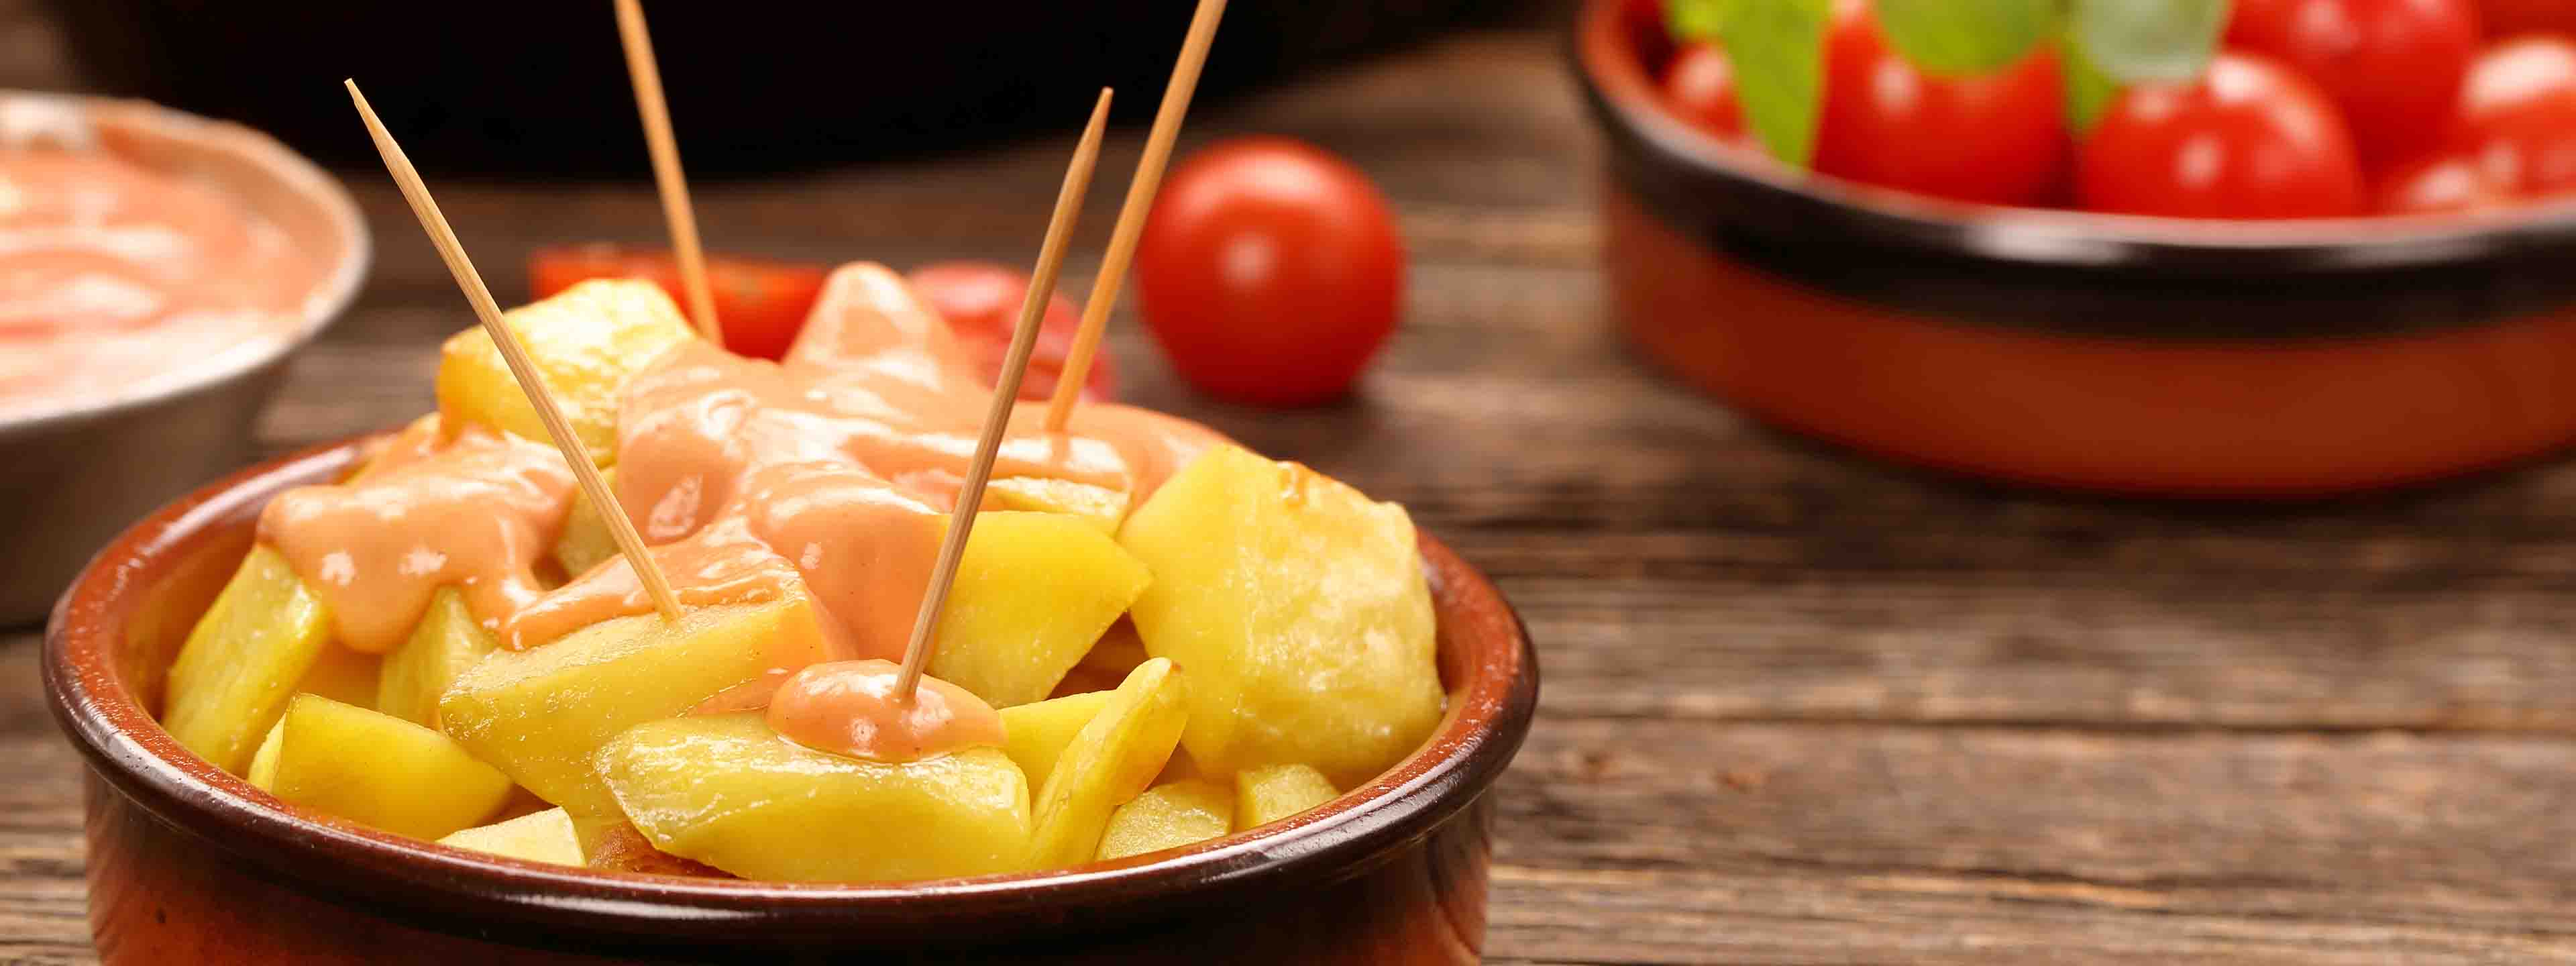 Halvstrke kartoffeltern, bedre kendt som patatas bravas, er en udbredt tapas i Catalonien